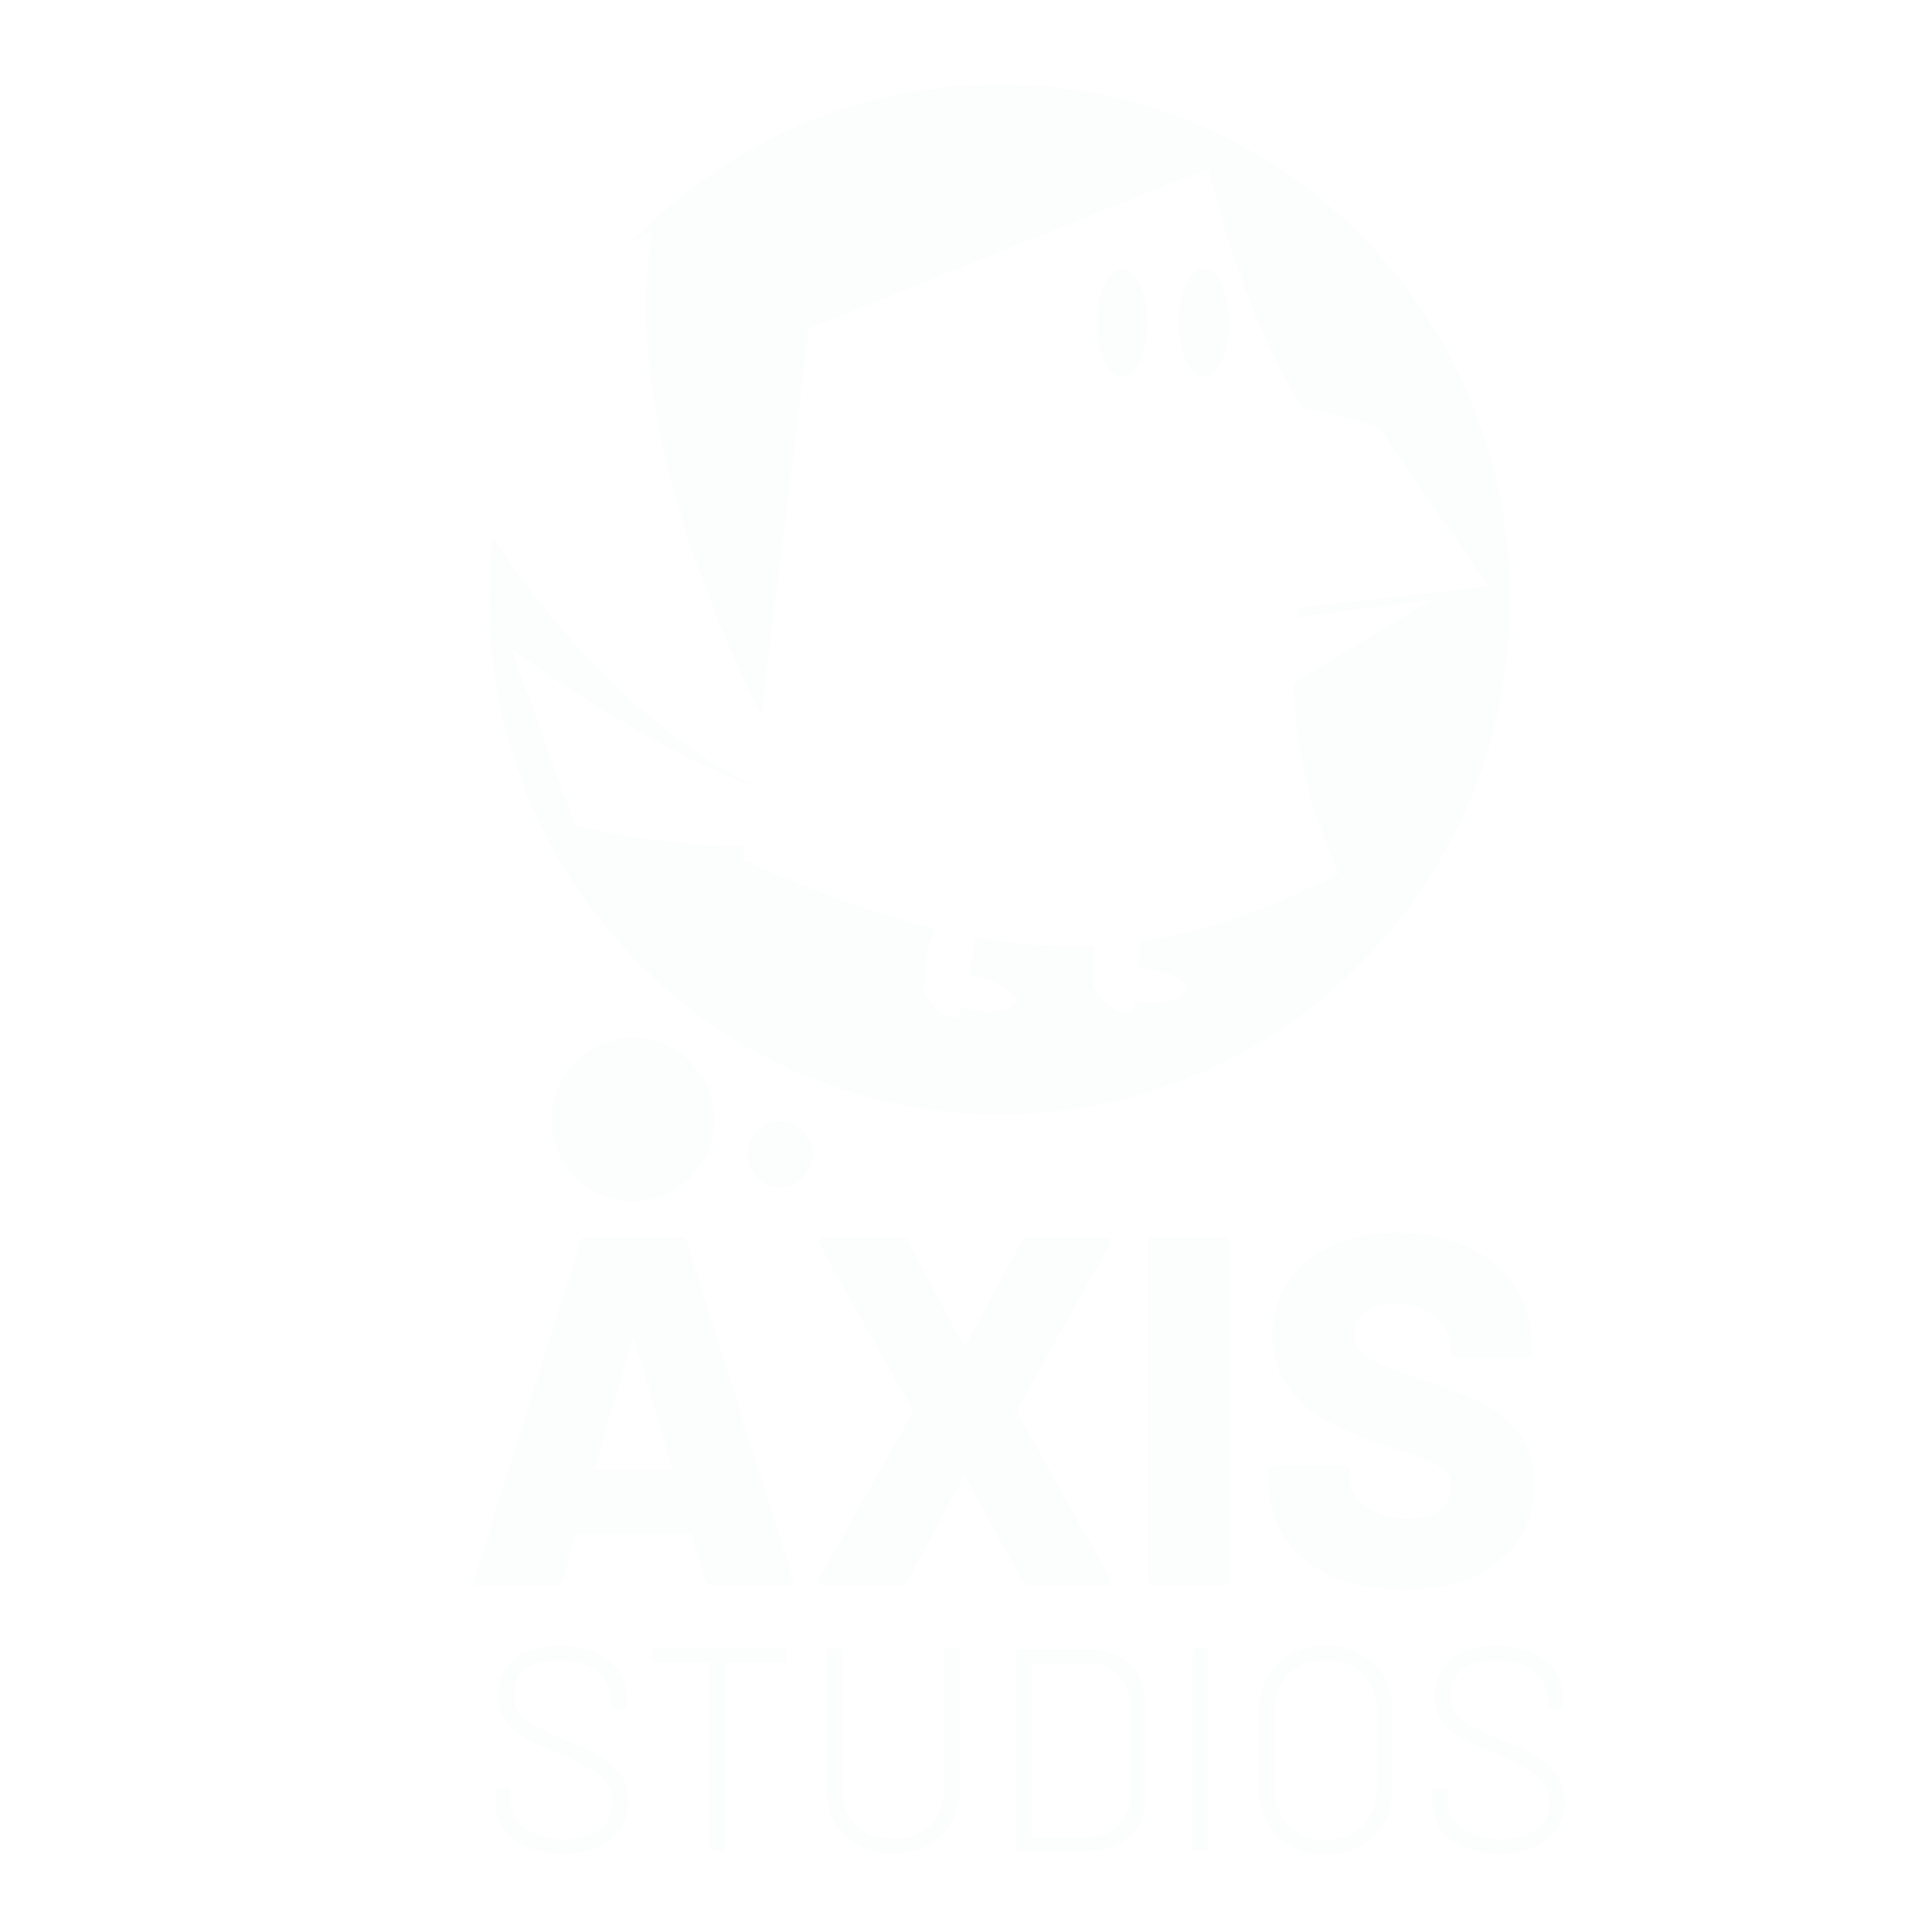 Axis Studios